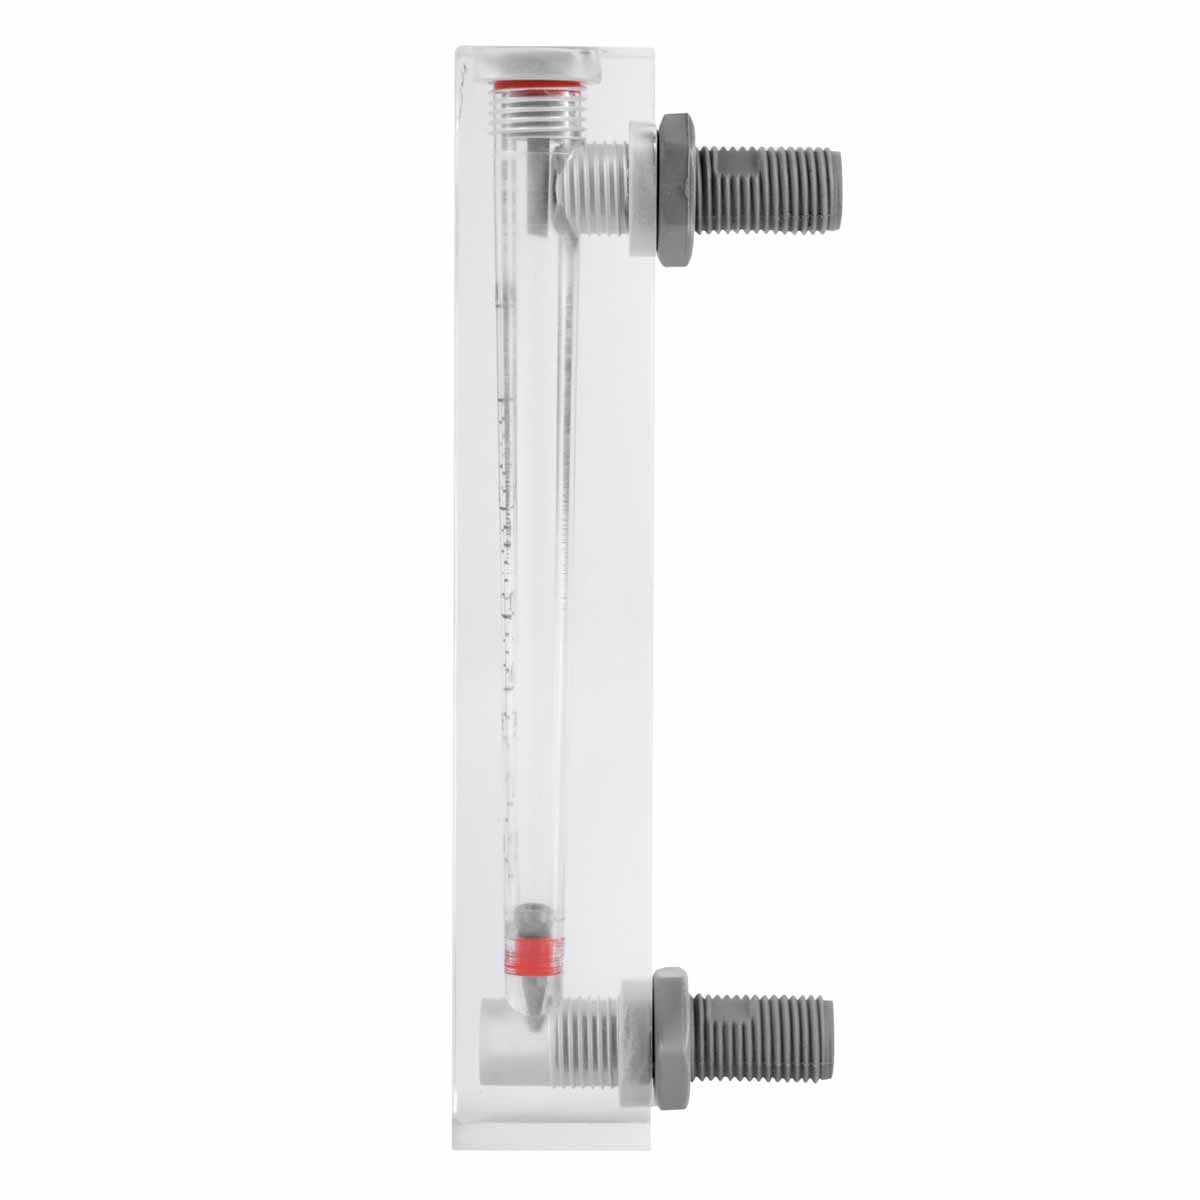 120 LPH Rotameter - Pearl Water